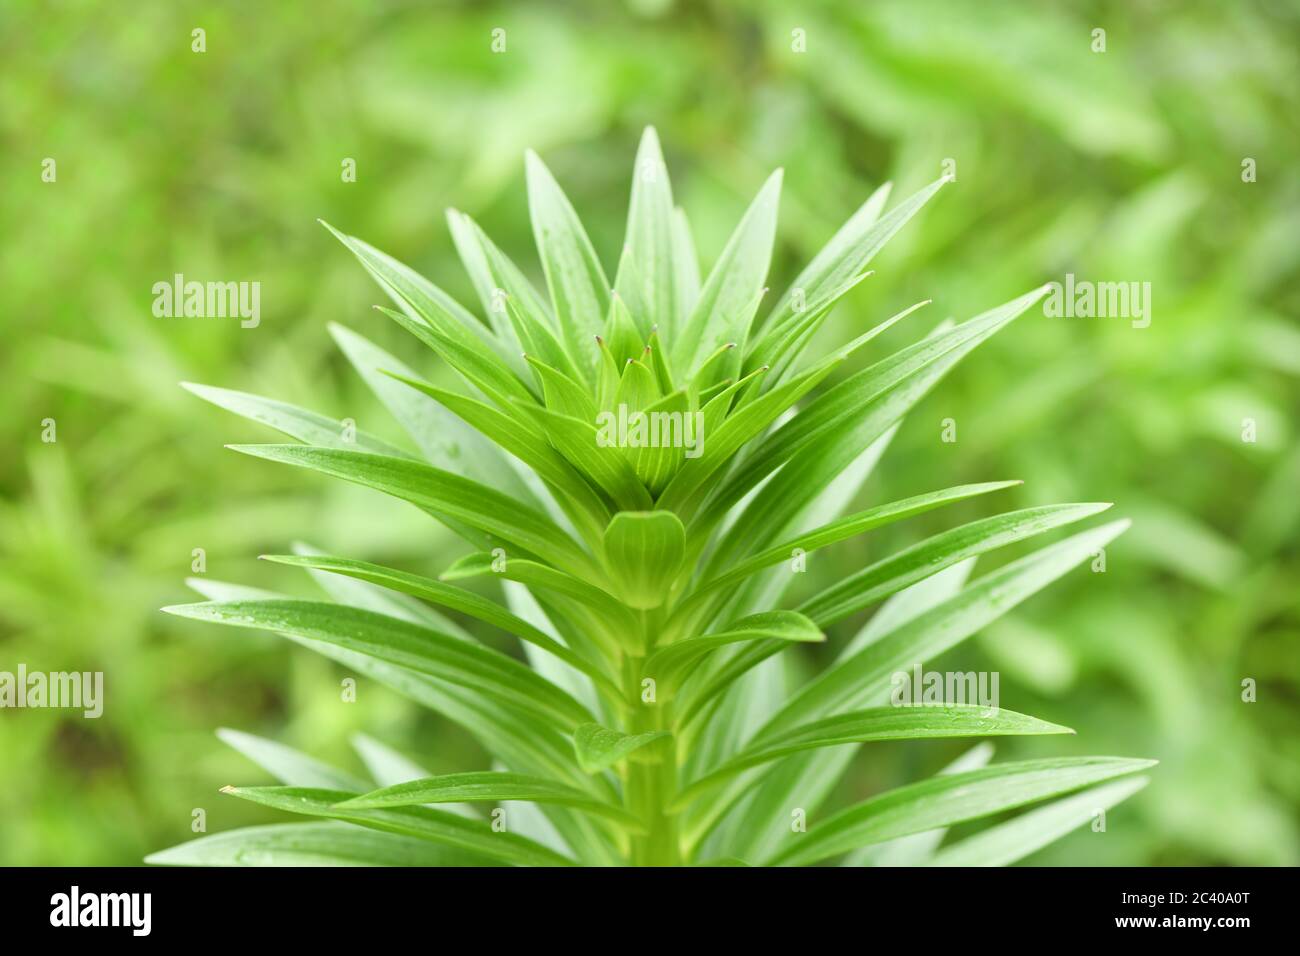 Ein grüner Rosenkohl im Regen fällt - helle Frühlingsgrün. Hochauflösendes Foto. Selektiver Fokus. Geringe Schärfentiefe. Stockfoto